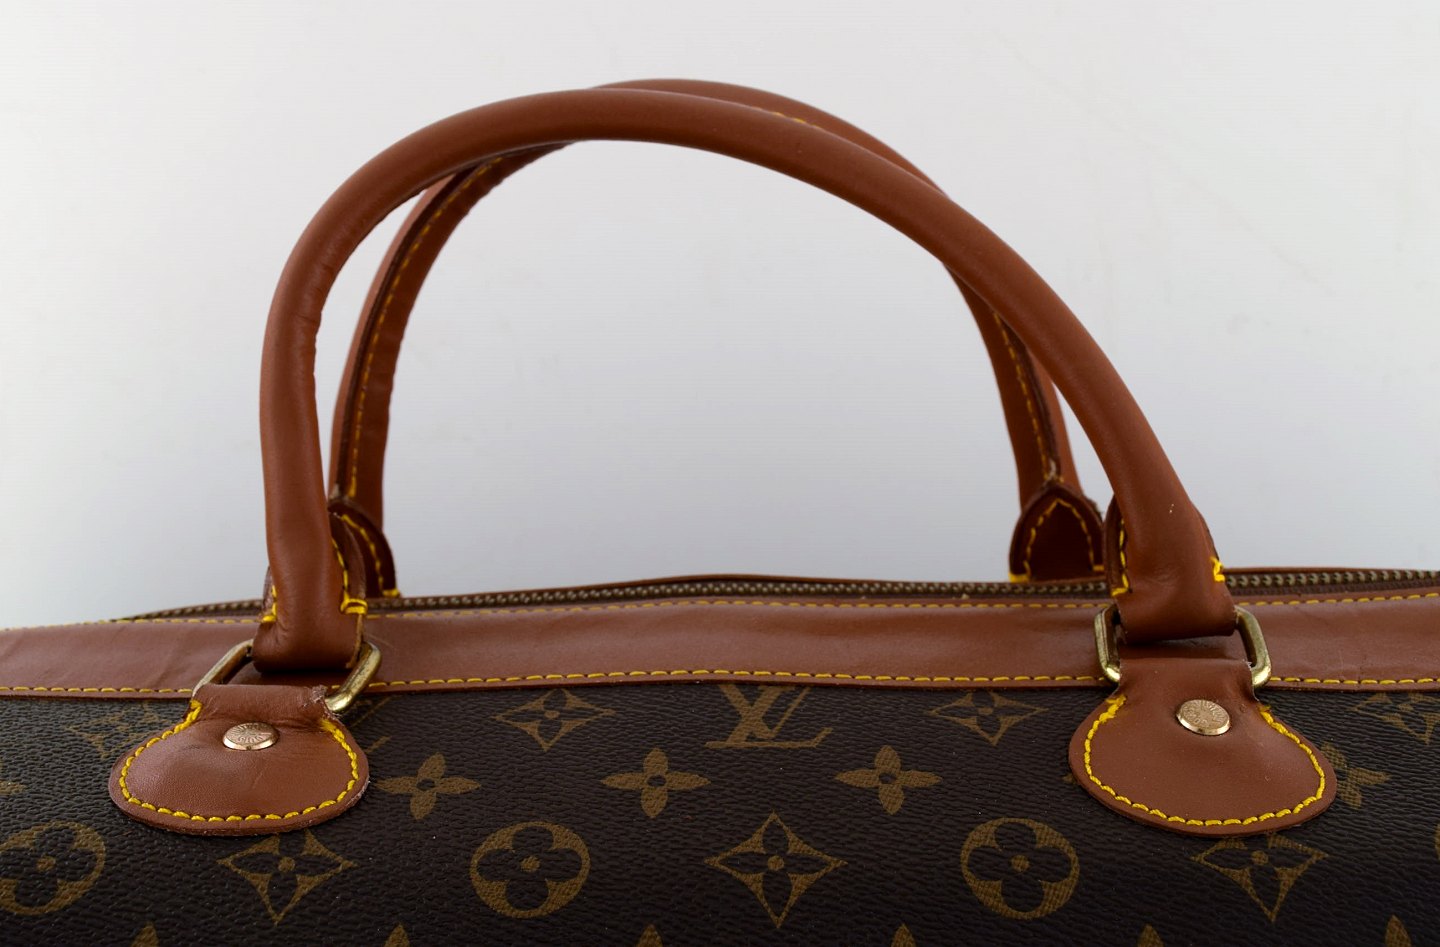  Louis Vuitton: Large vintage travel bag of